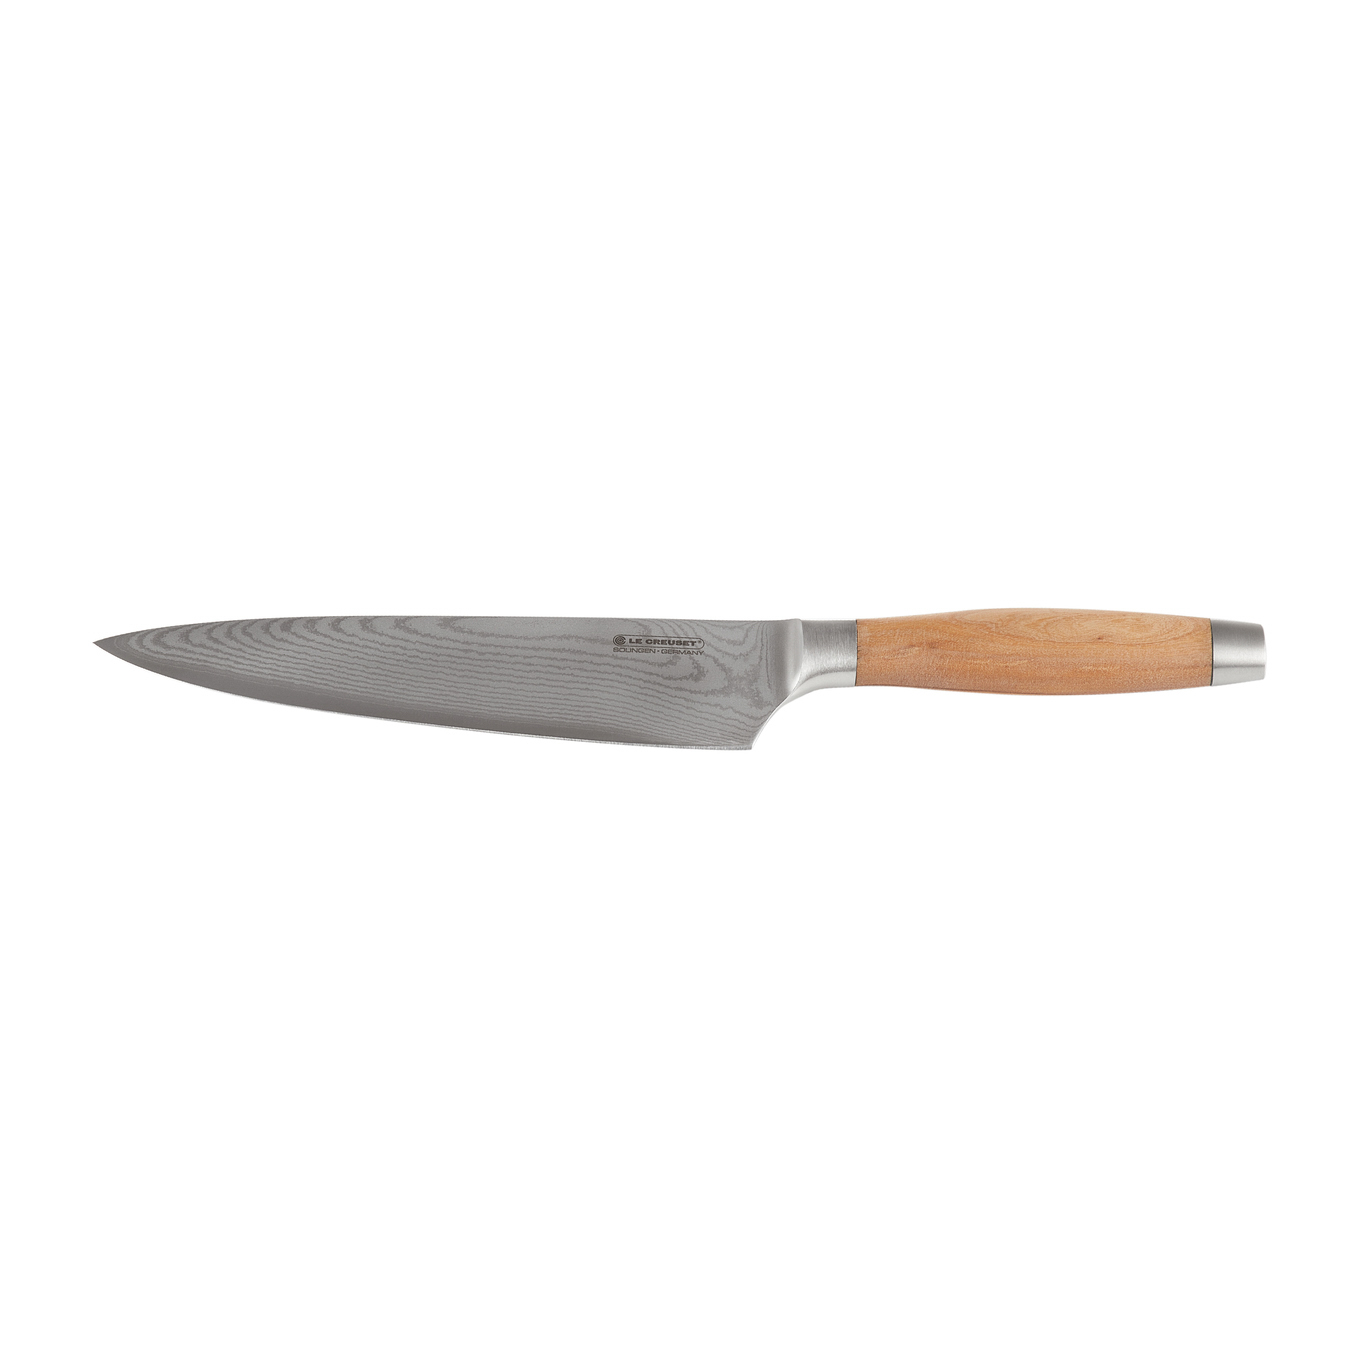 https://www.nordicnest.com/assets/blobs/le-creuset-le-creuset-knife-with-olive-wood-handle-20-cm/514185-01_1_ProductImageMain-10731f024a.jpeg